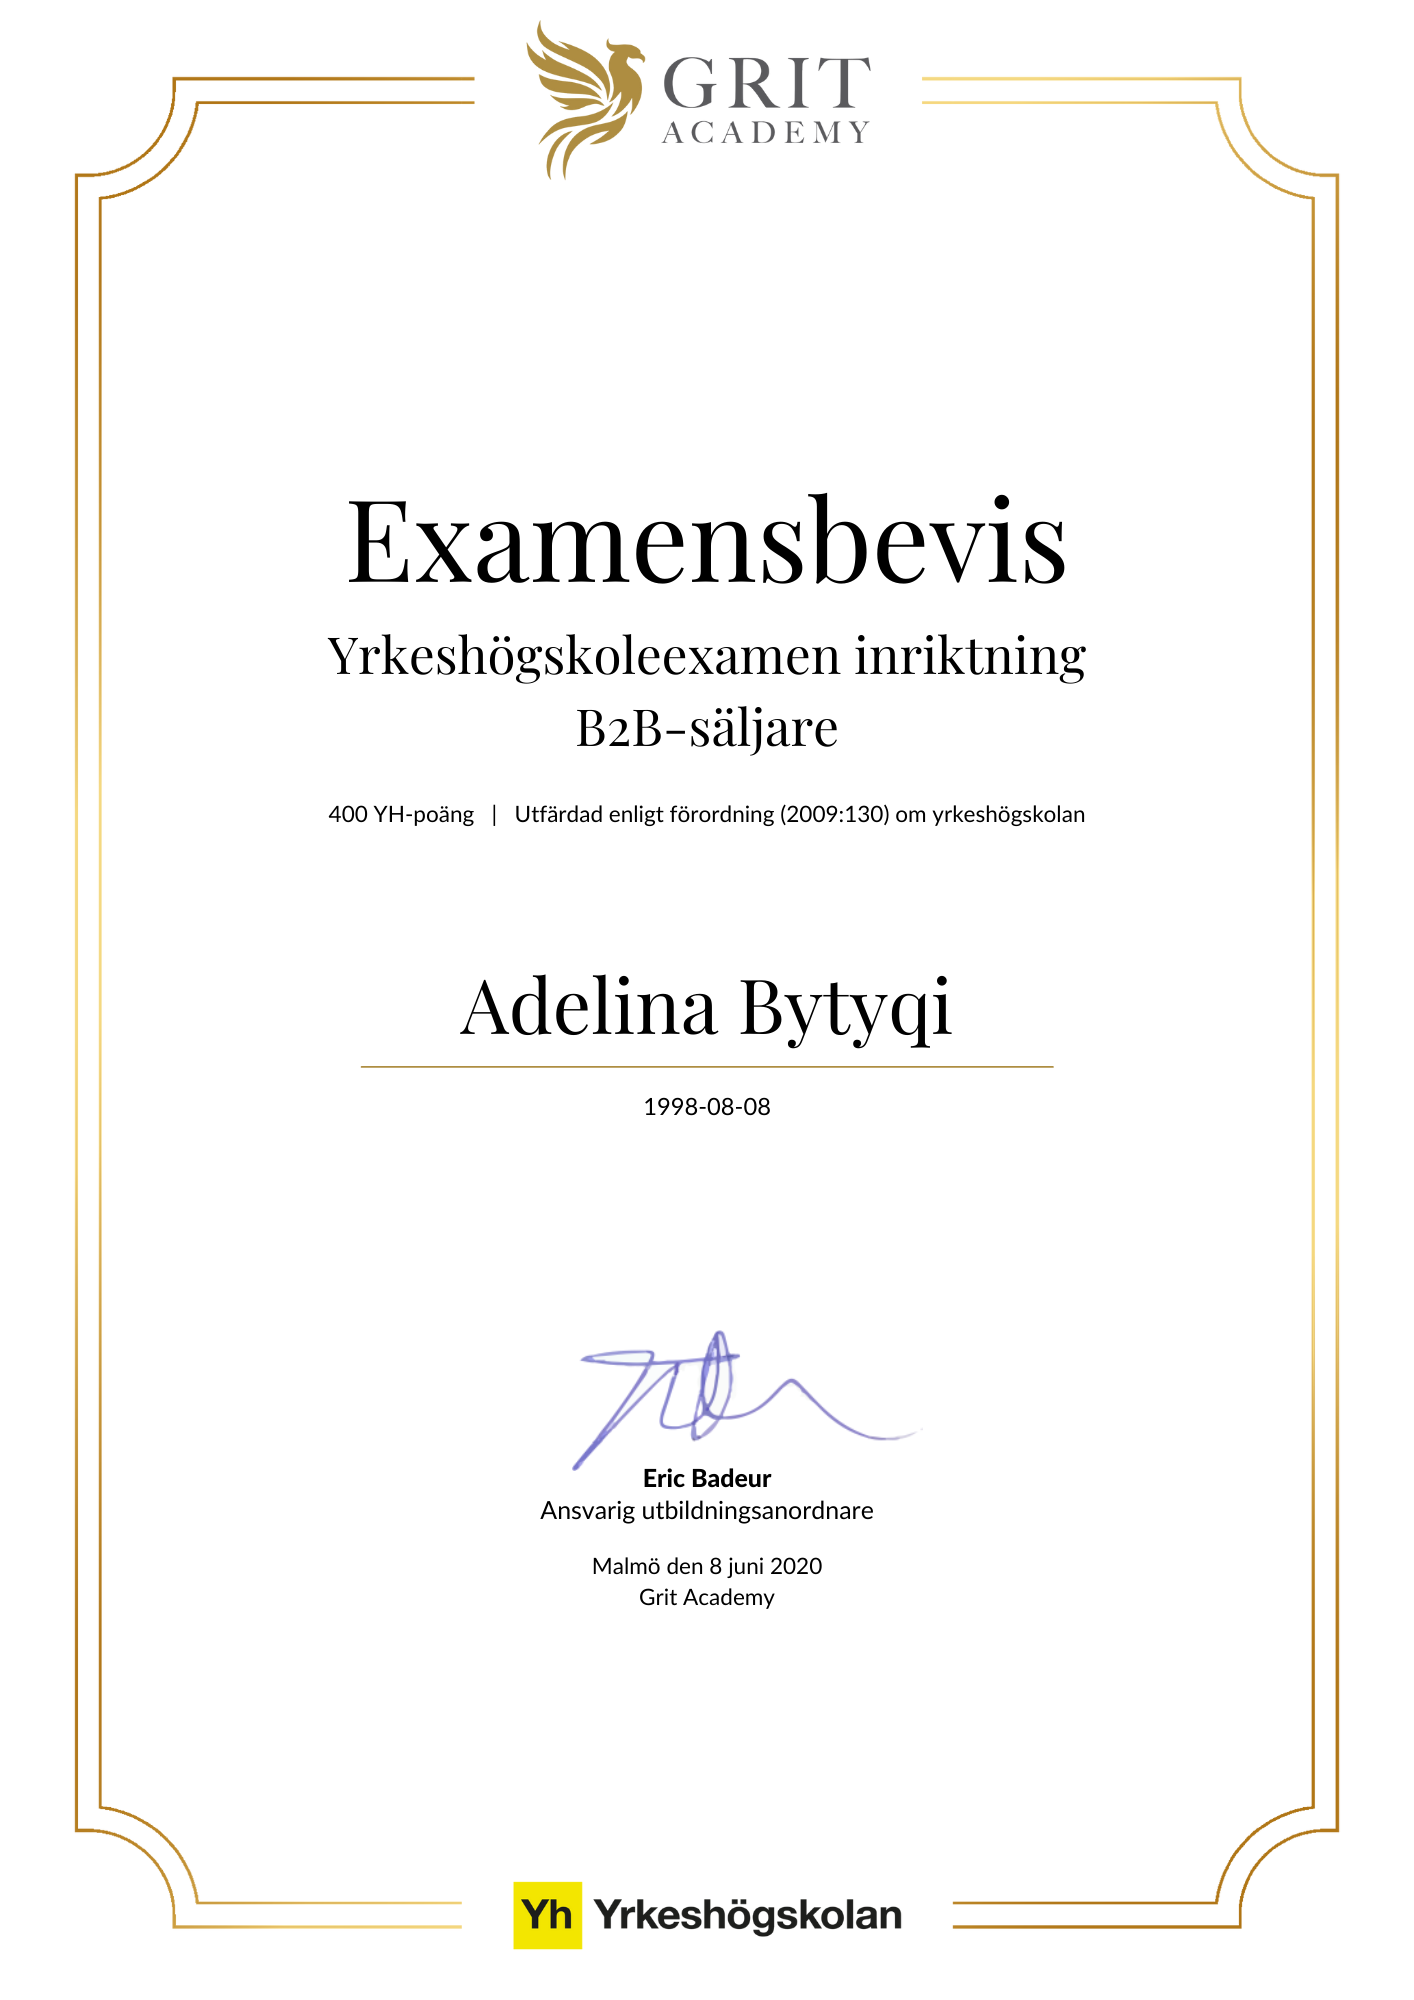 Examensbevis Adelina Bytyqi - 1